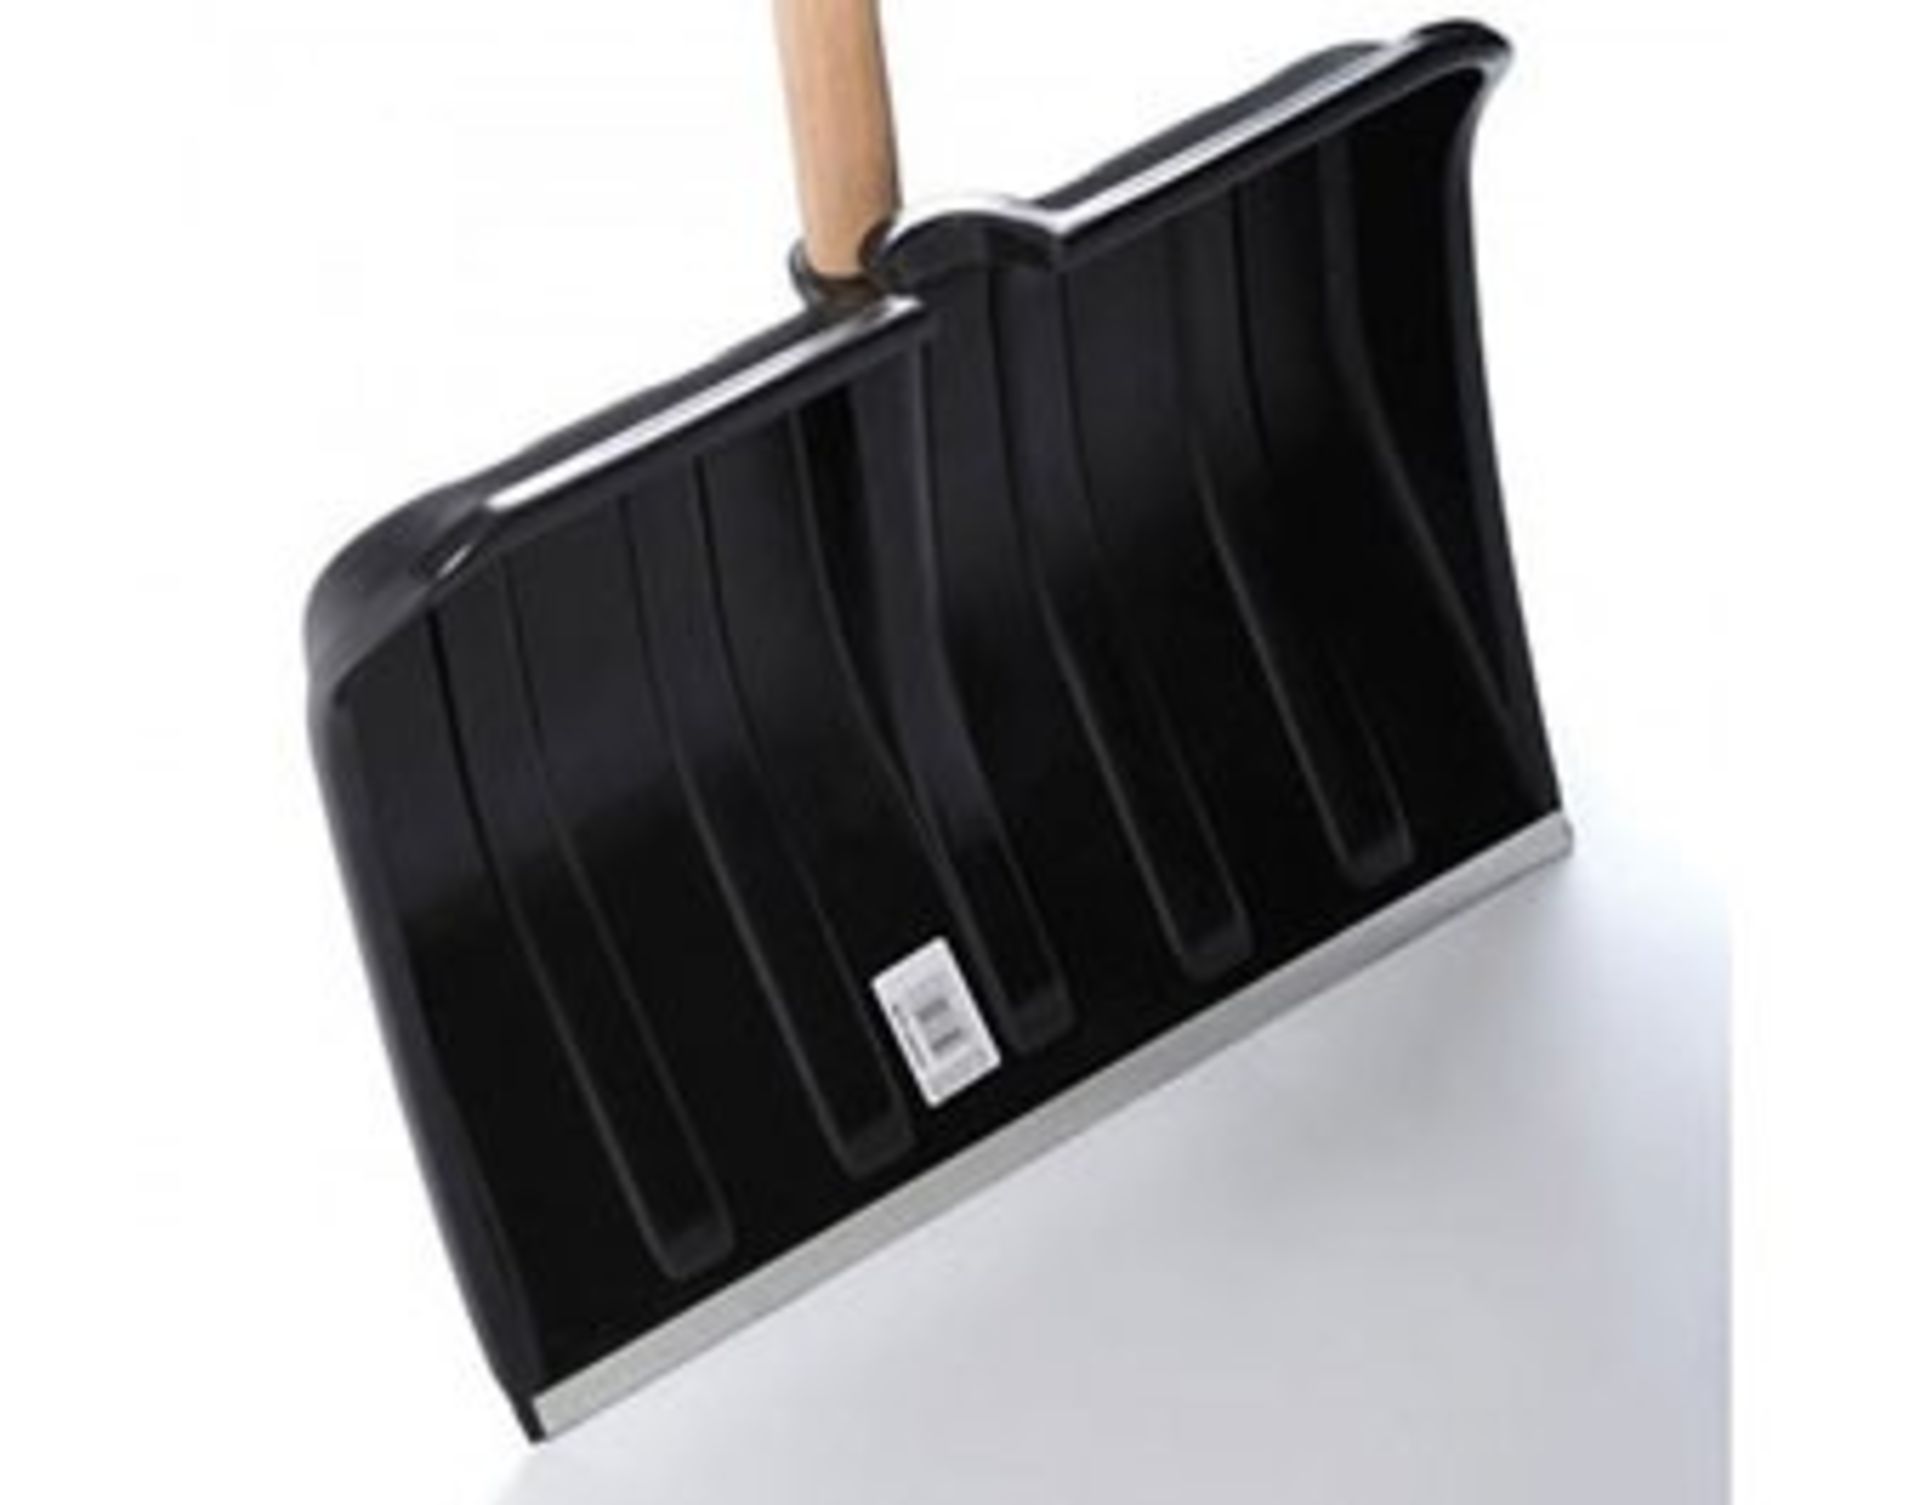 200 x Aleco 47 Black Multi Purpose Shovel with Metal Edge